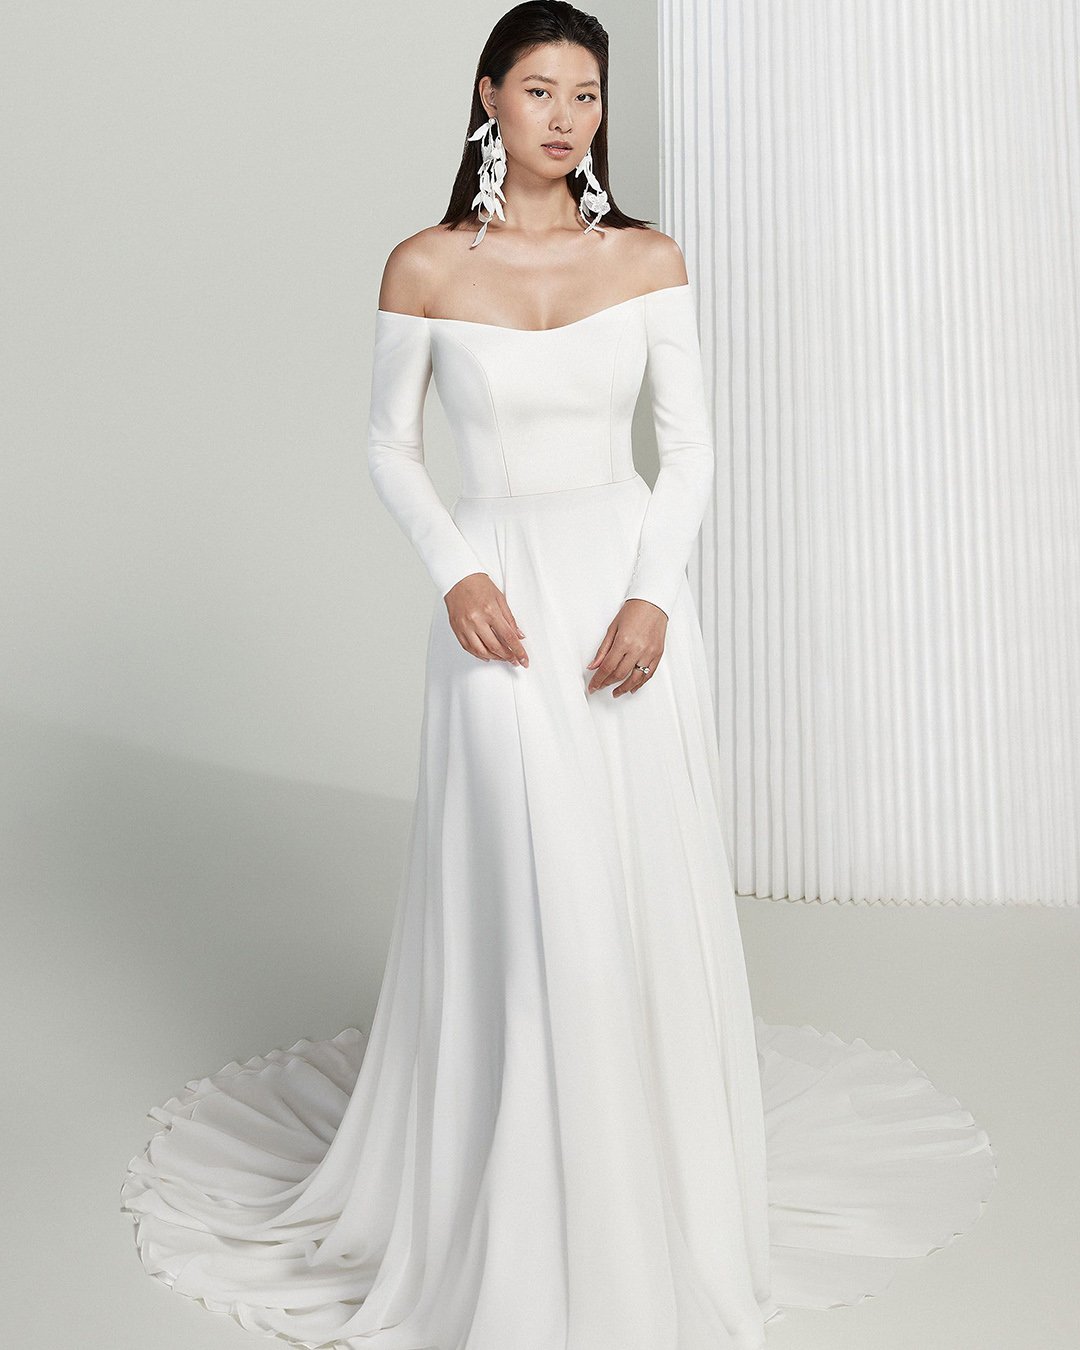 wedding dresses spring 2022 simple off the shoulder with sleeves justin alexander